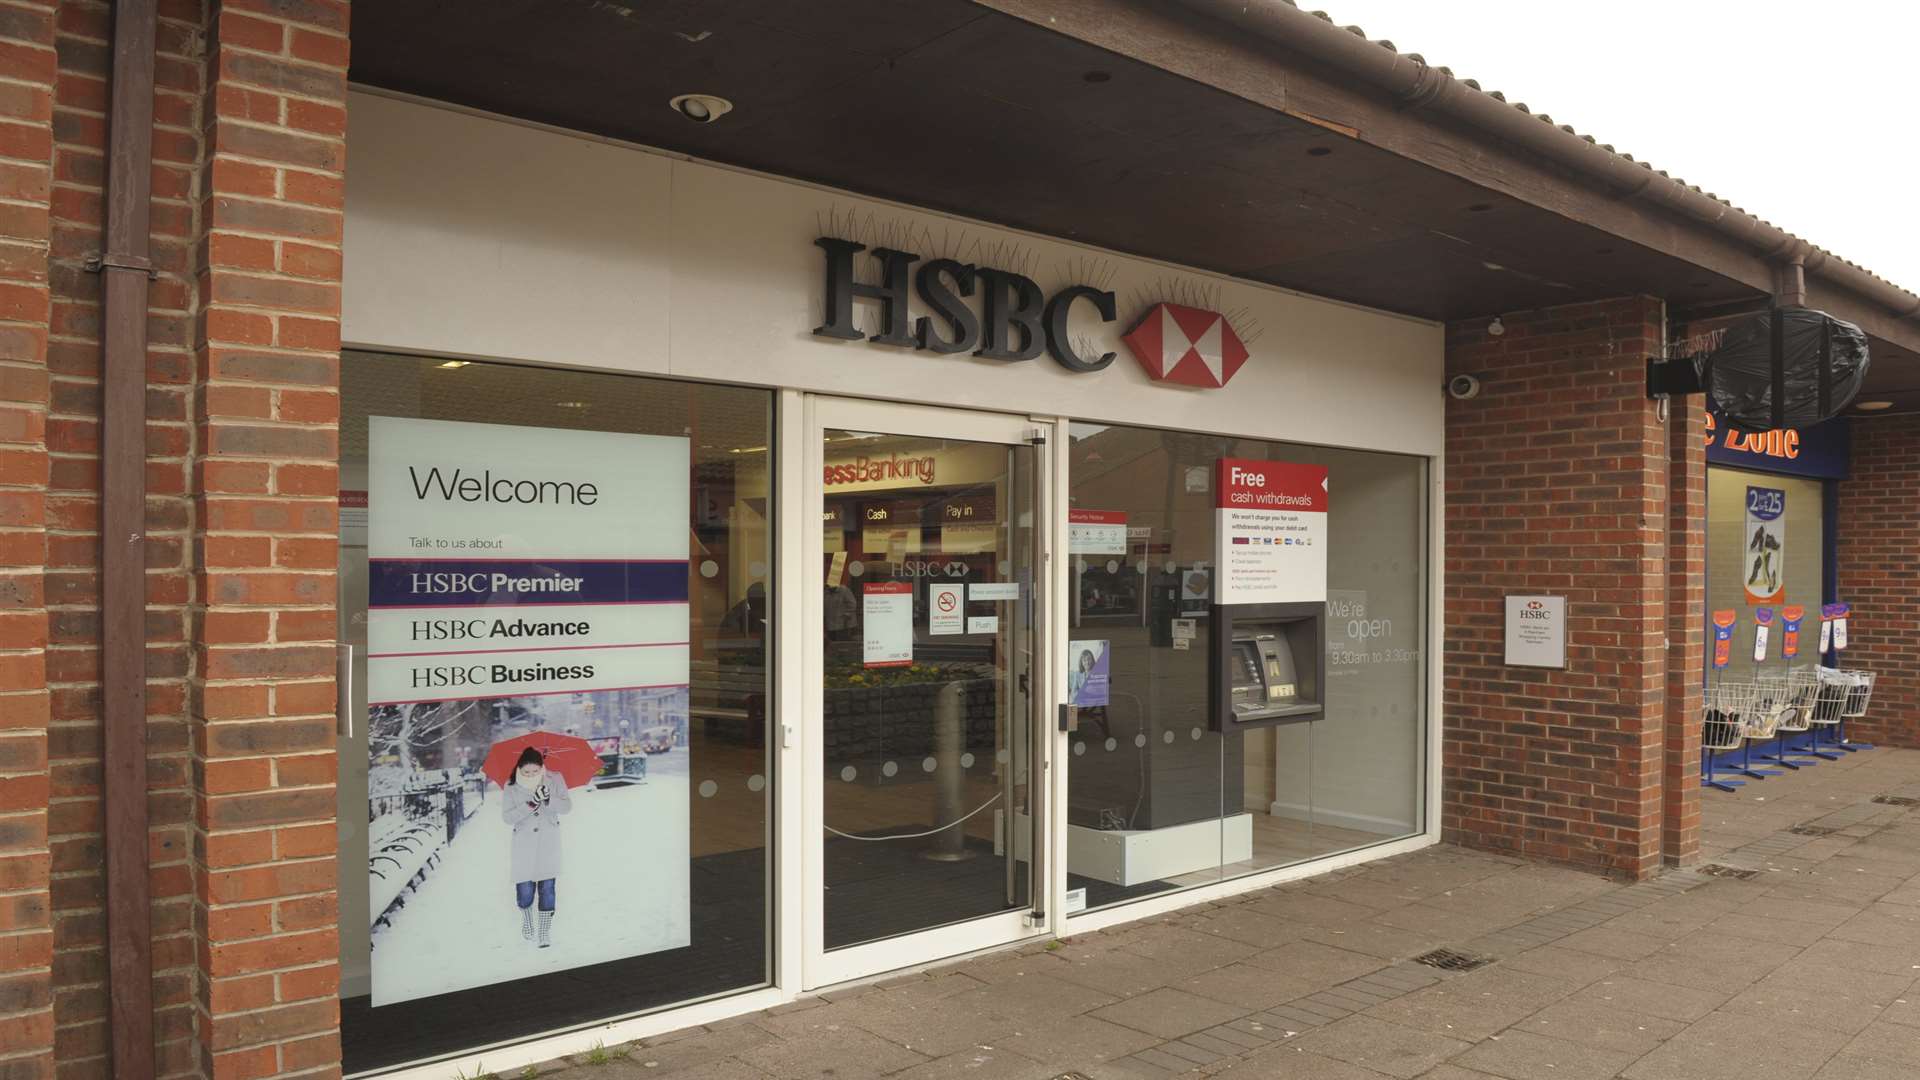 Neaverson also targeted the HSBC in Rainham High Street